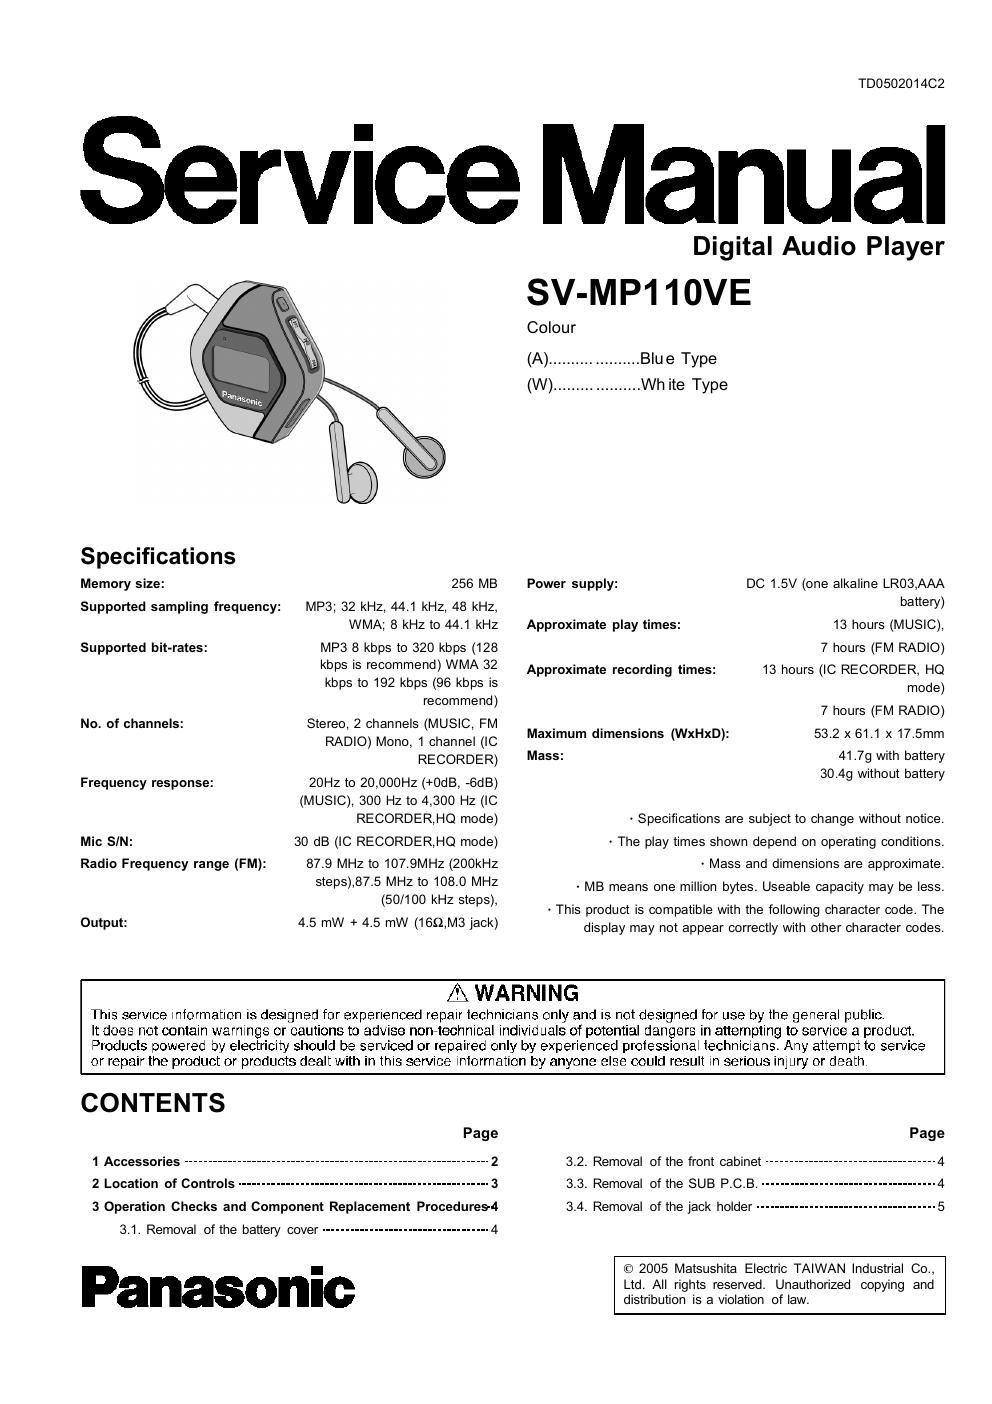 panasonic sv mp 110 ve service manual